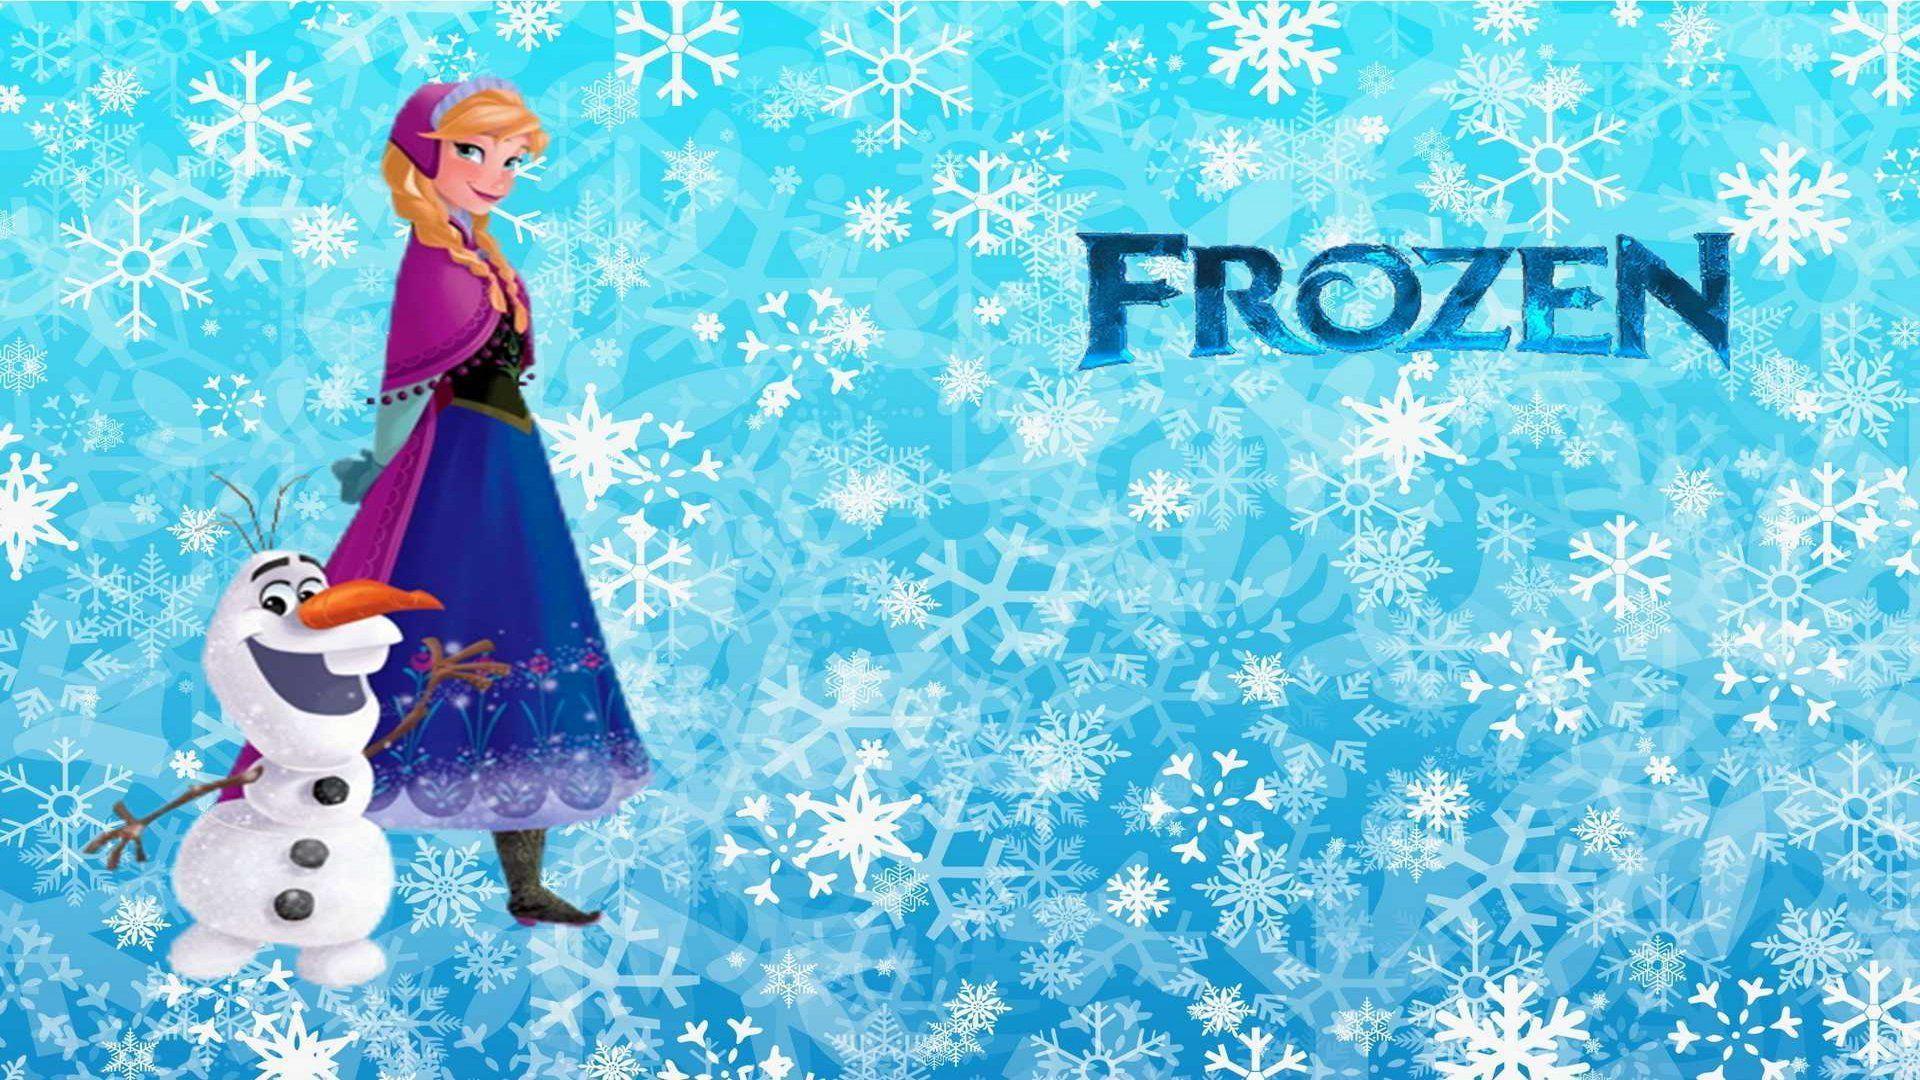 AmazingPict.com. Frozen Anna and Olaf Wallpaper